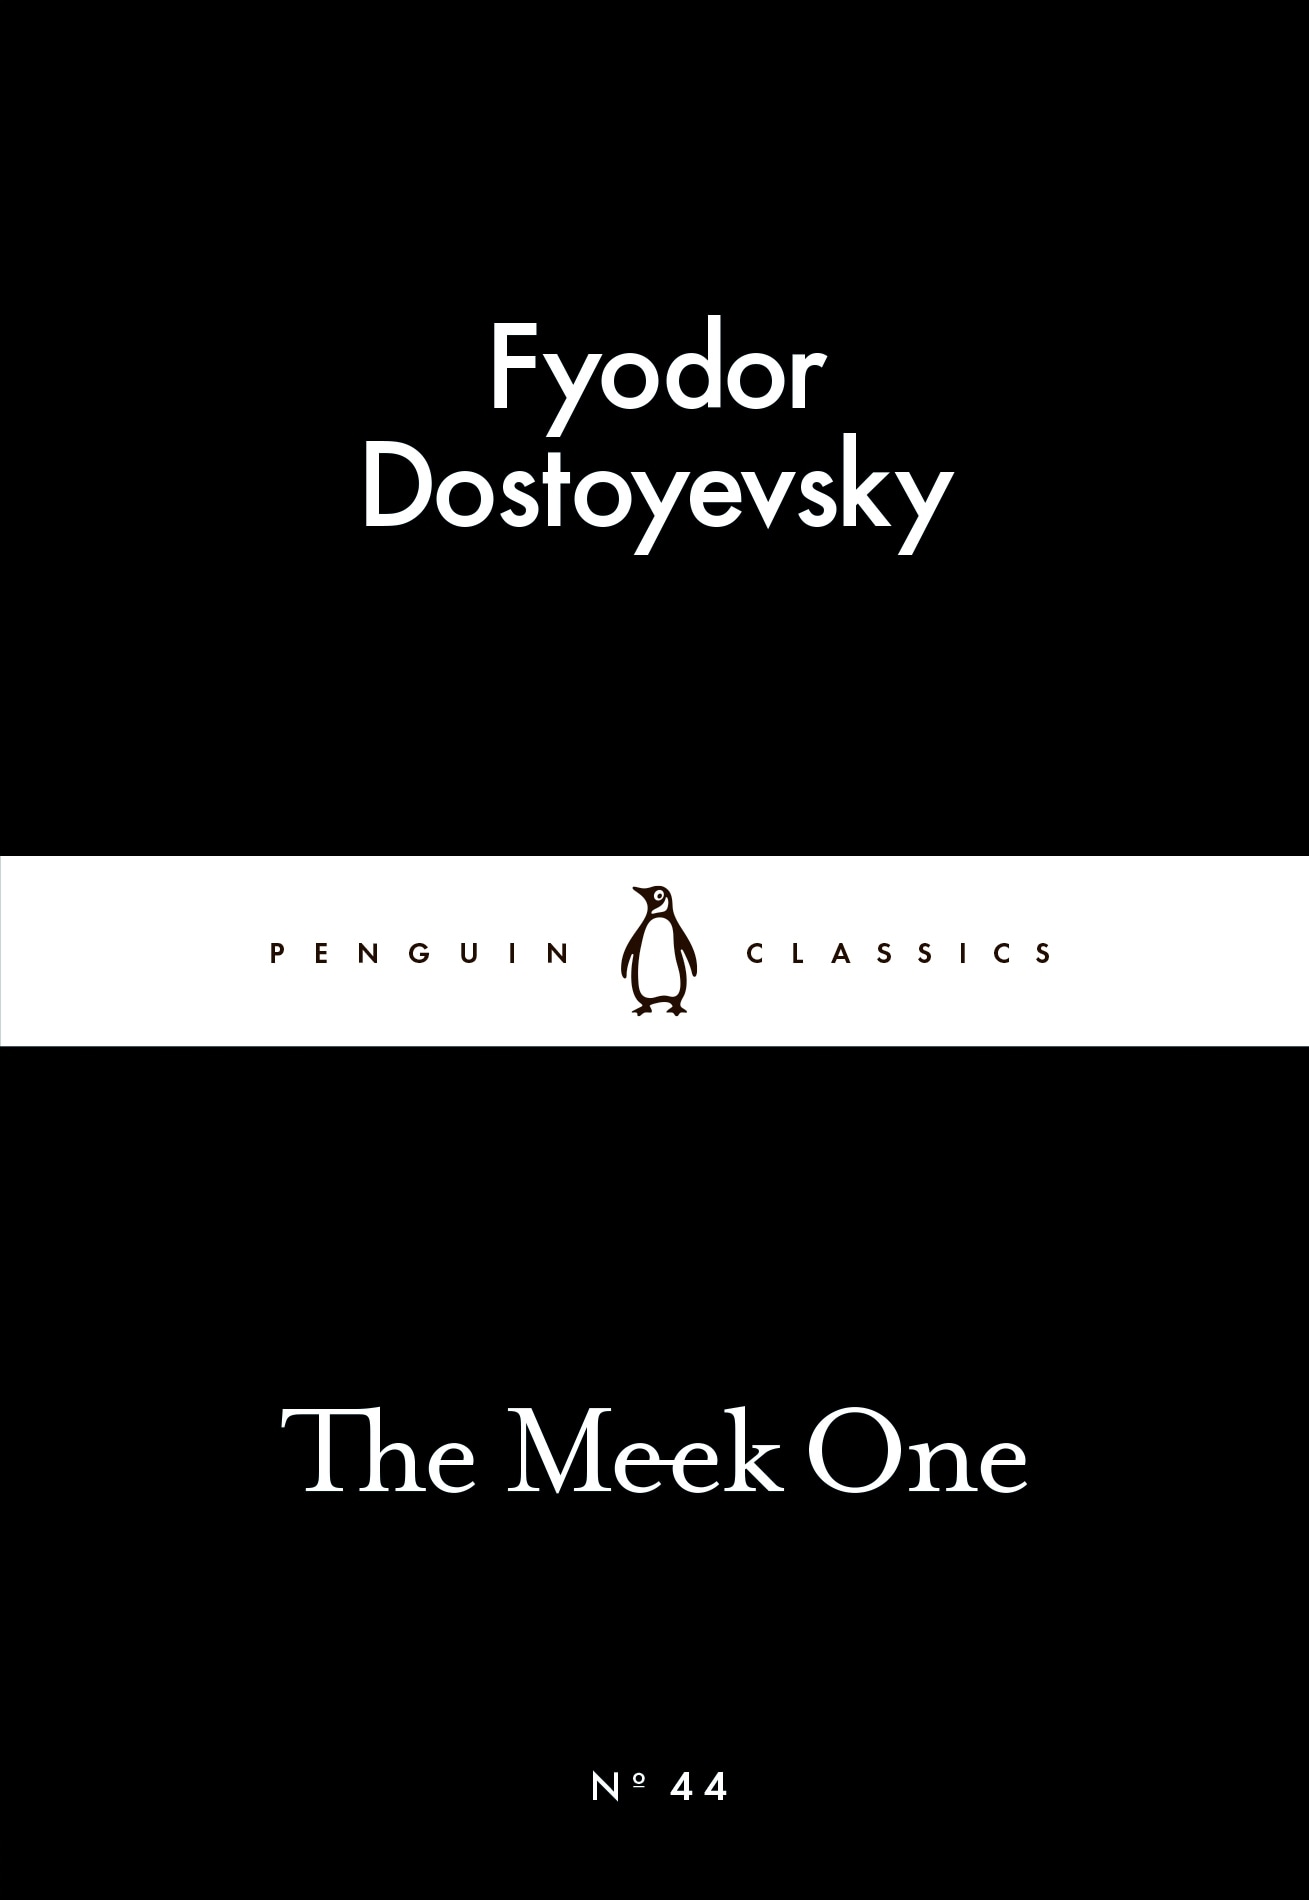 Book “The Meek One” by Fyodor Dostoyevsky — February 26, 2015